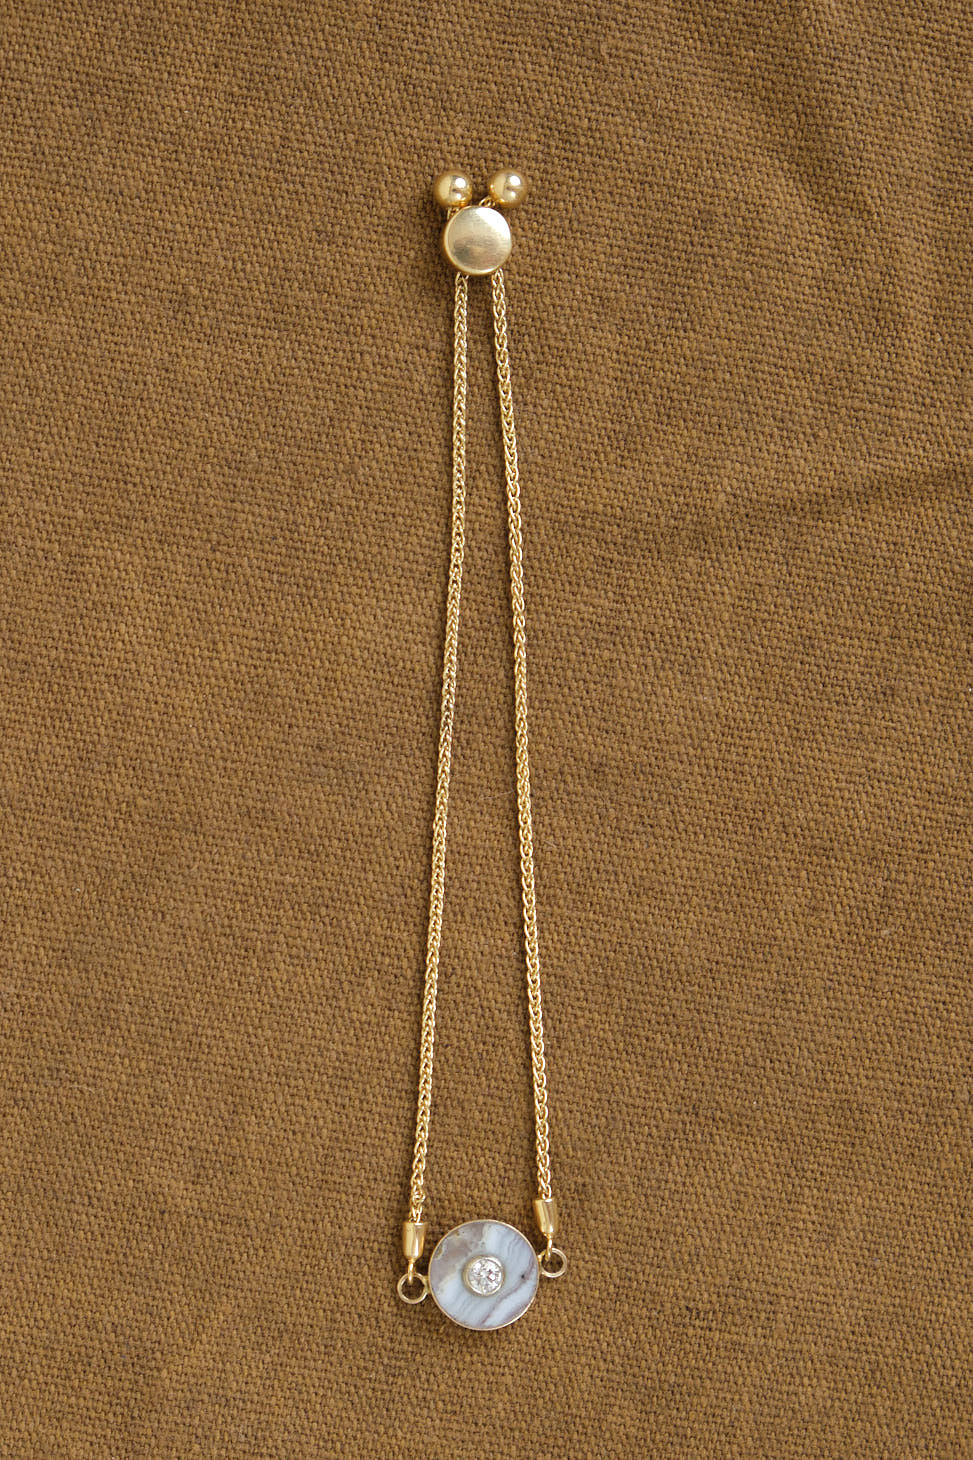 Cerclen Bolo Style Bracelet in Sow Belly Agate on table